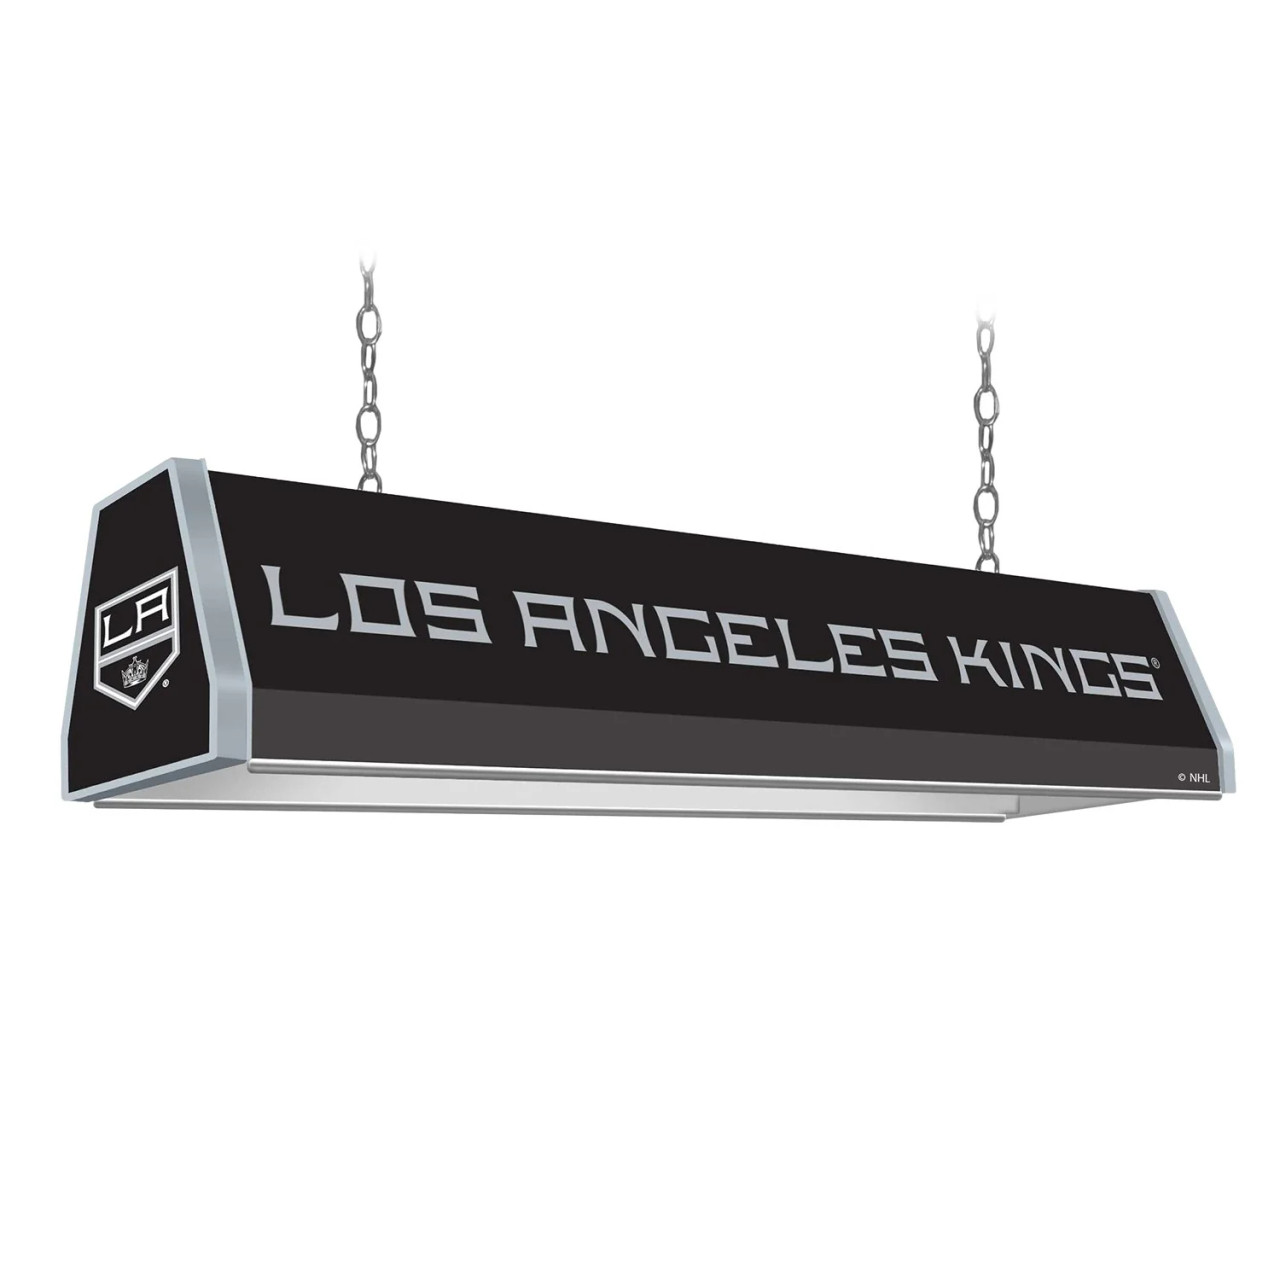 LAK, LA, Los Angeles, Kings, Standard, Pool, Billiard, Table, Light, NHLAKG-310-01, The Fan-Brand, NHL, 686878992496